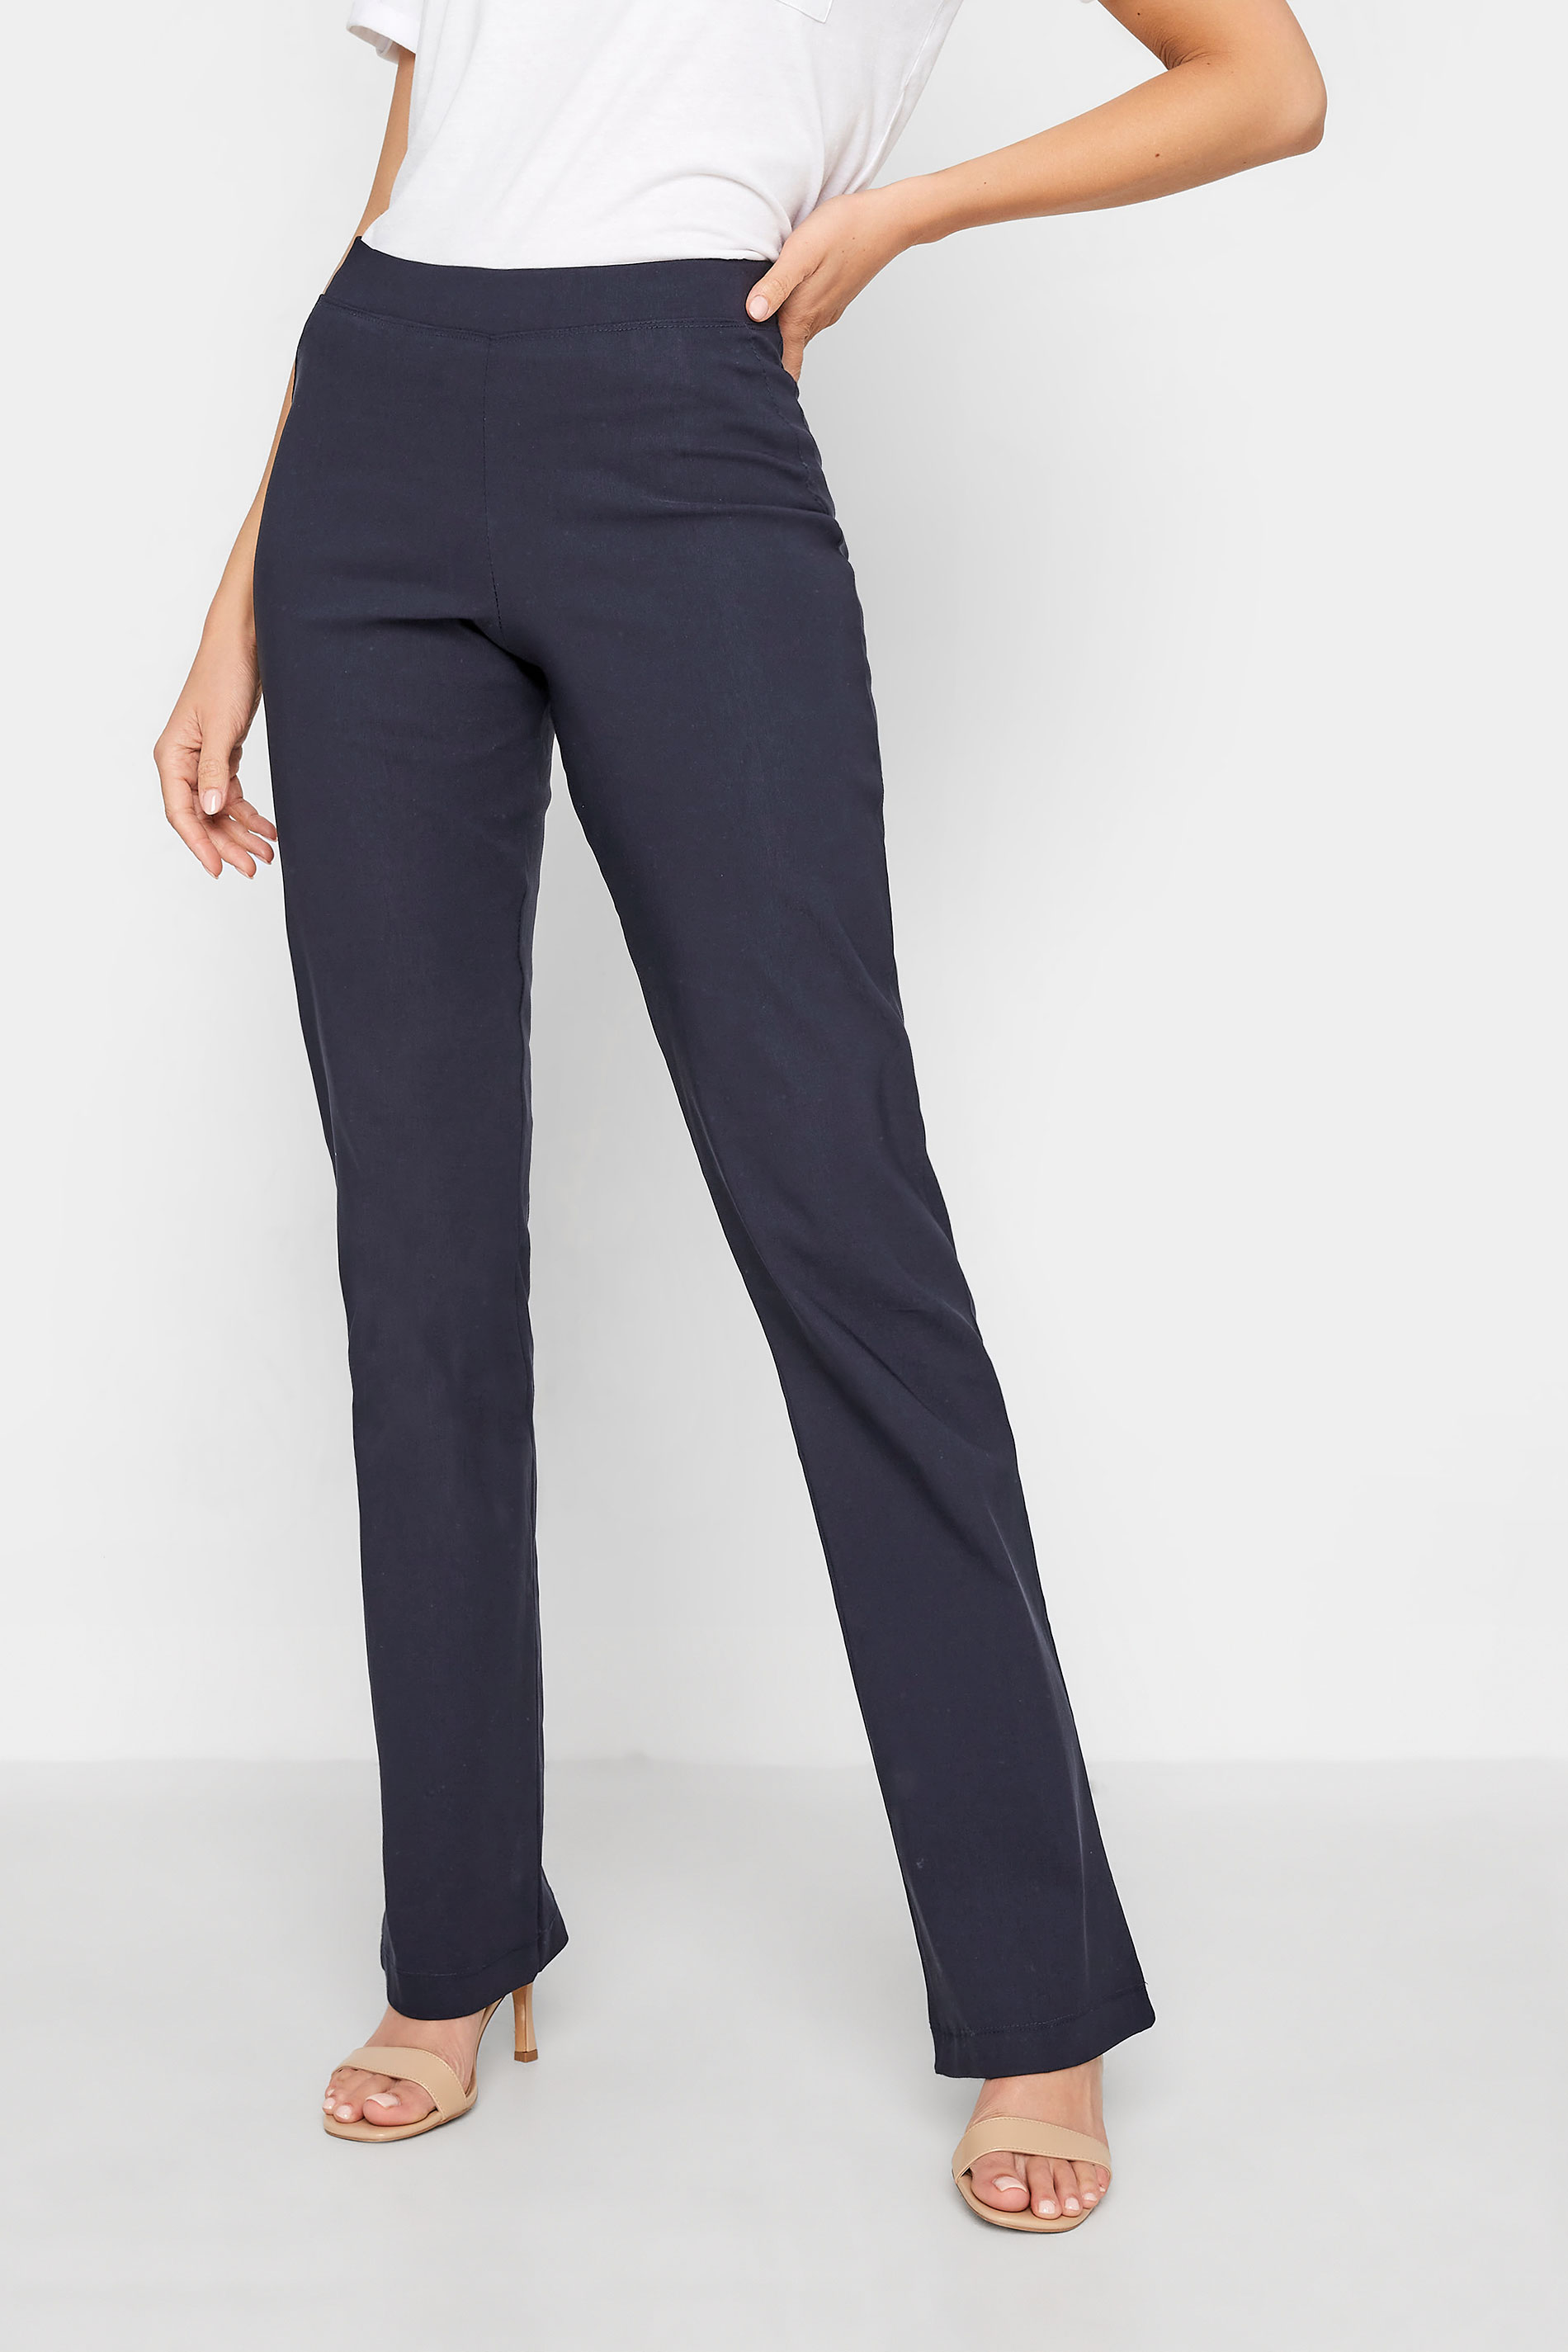 Charcoal grey trousers women Plus size-Straight leg 2bk pockets - Belore  Slims